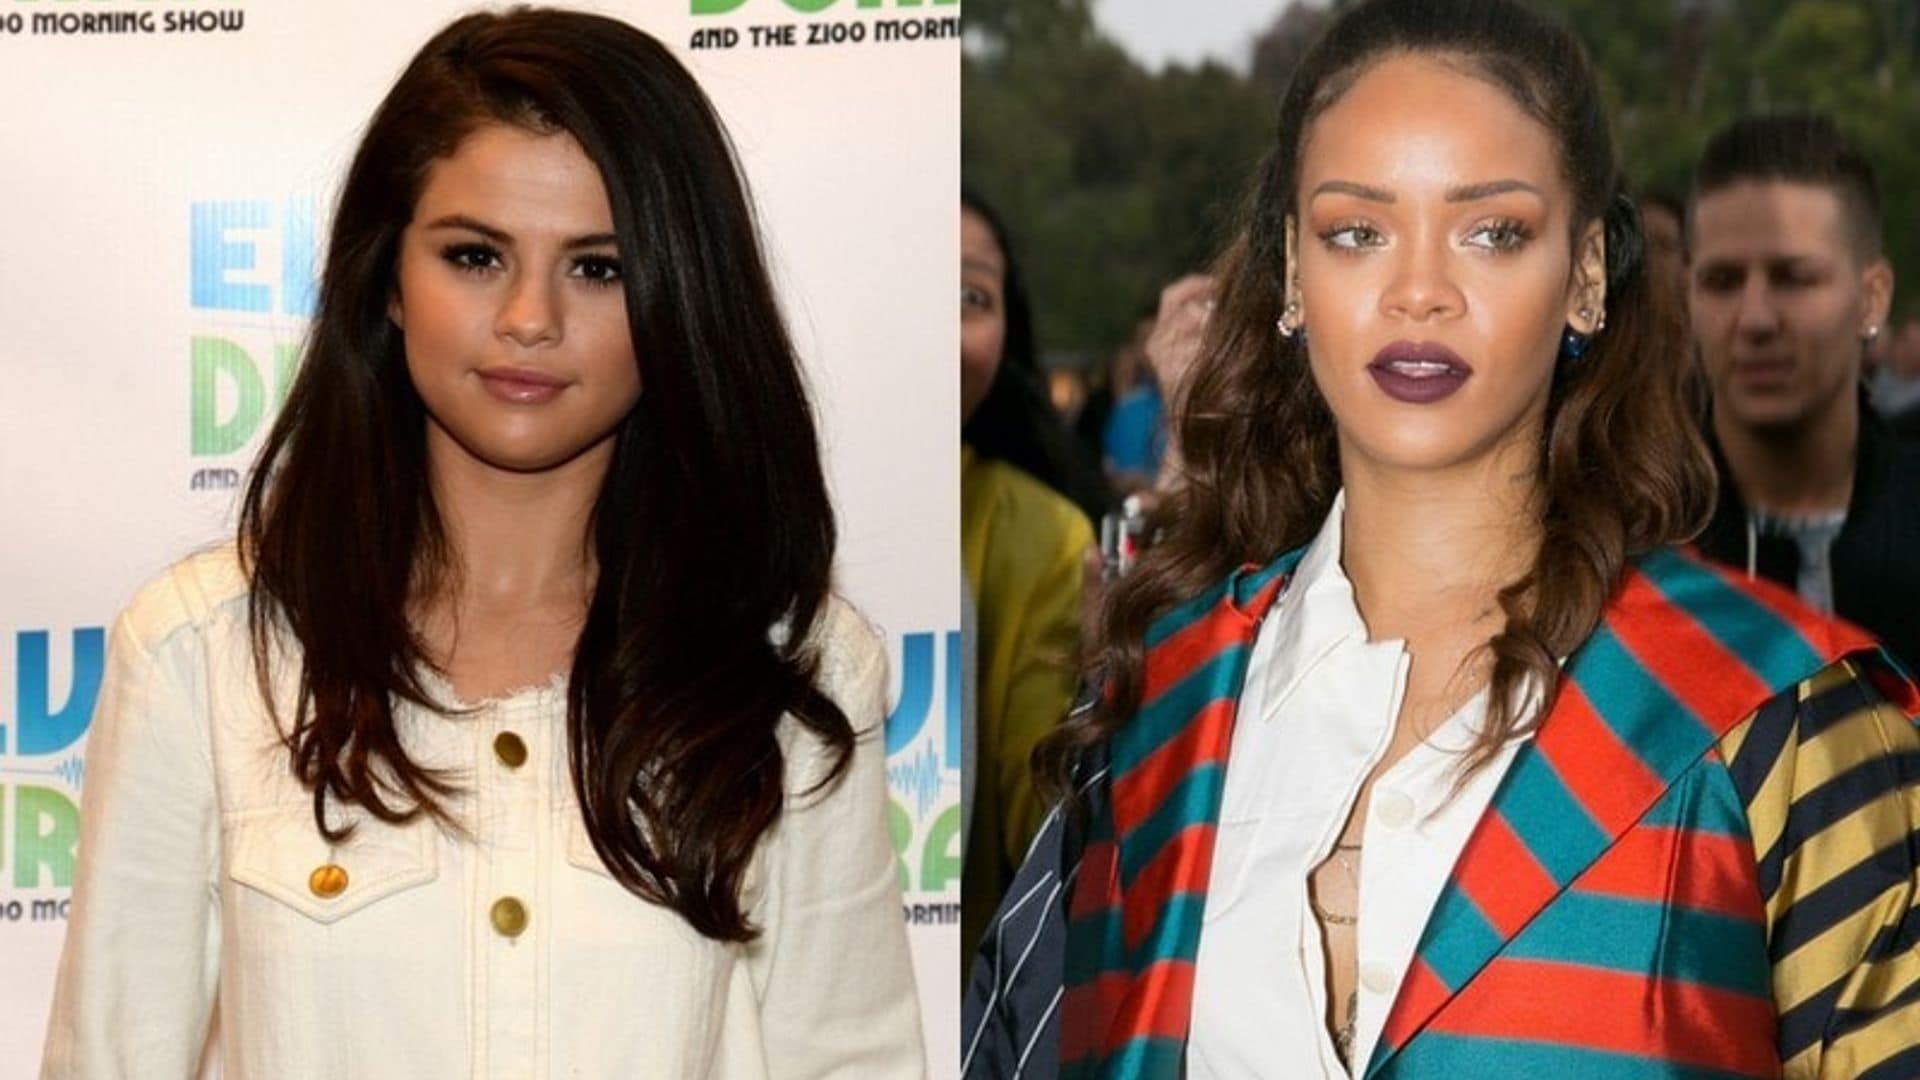 Rihanna and Selena Gomez set to perform at the 2015 Victoria's Secret show